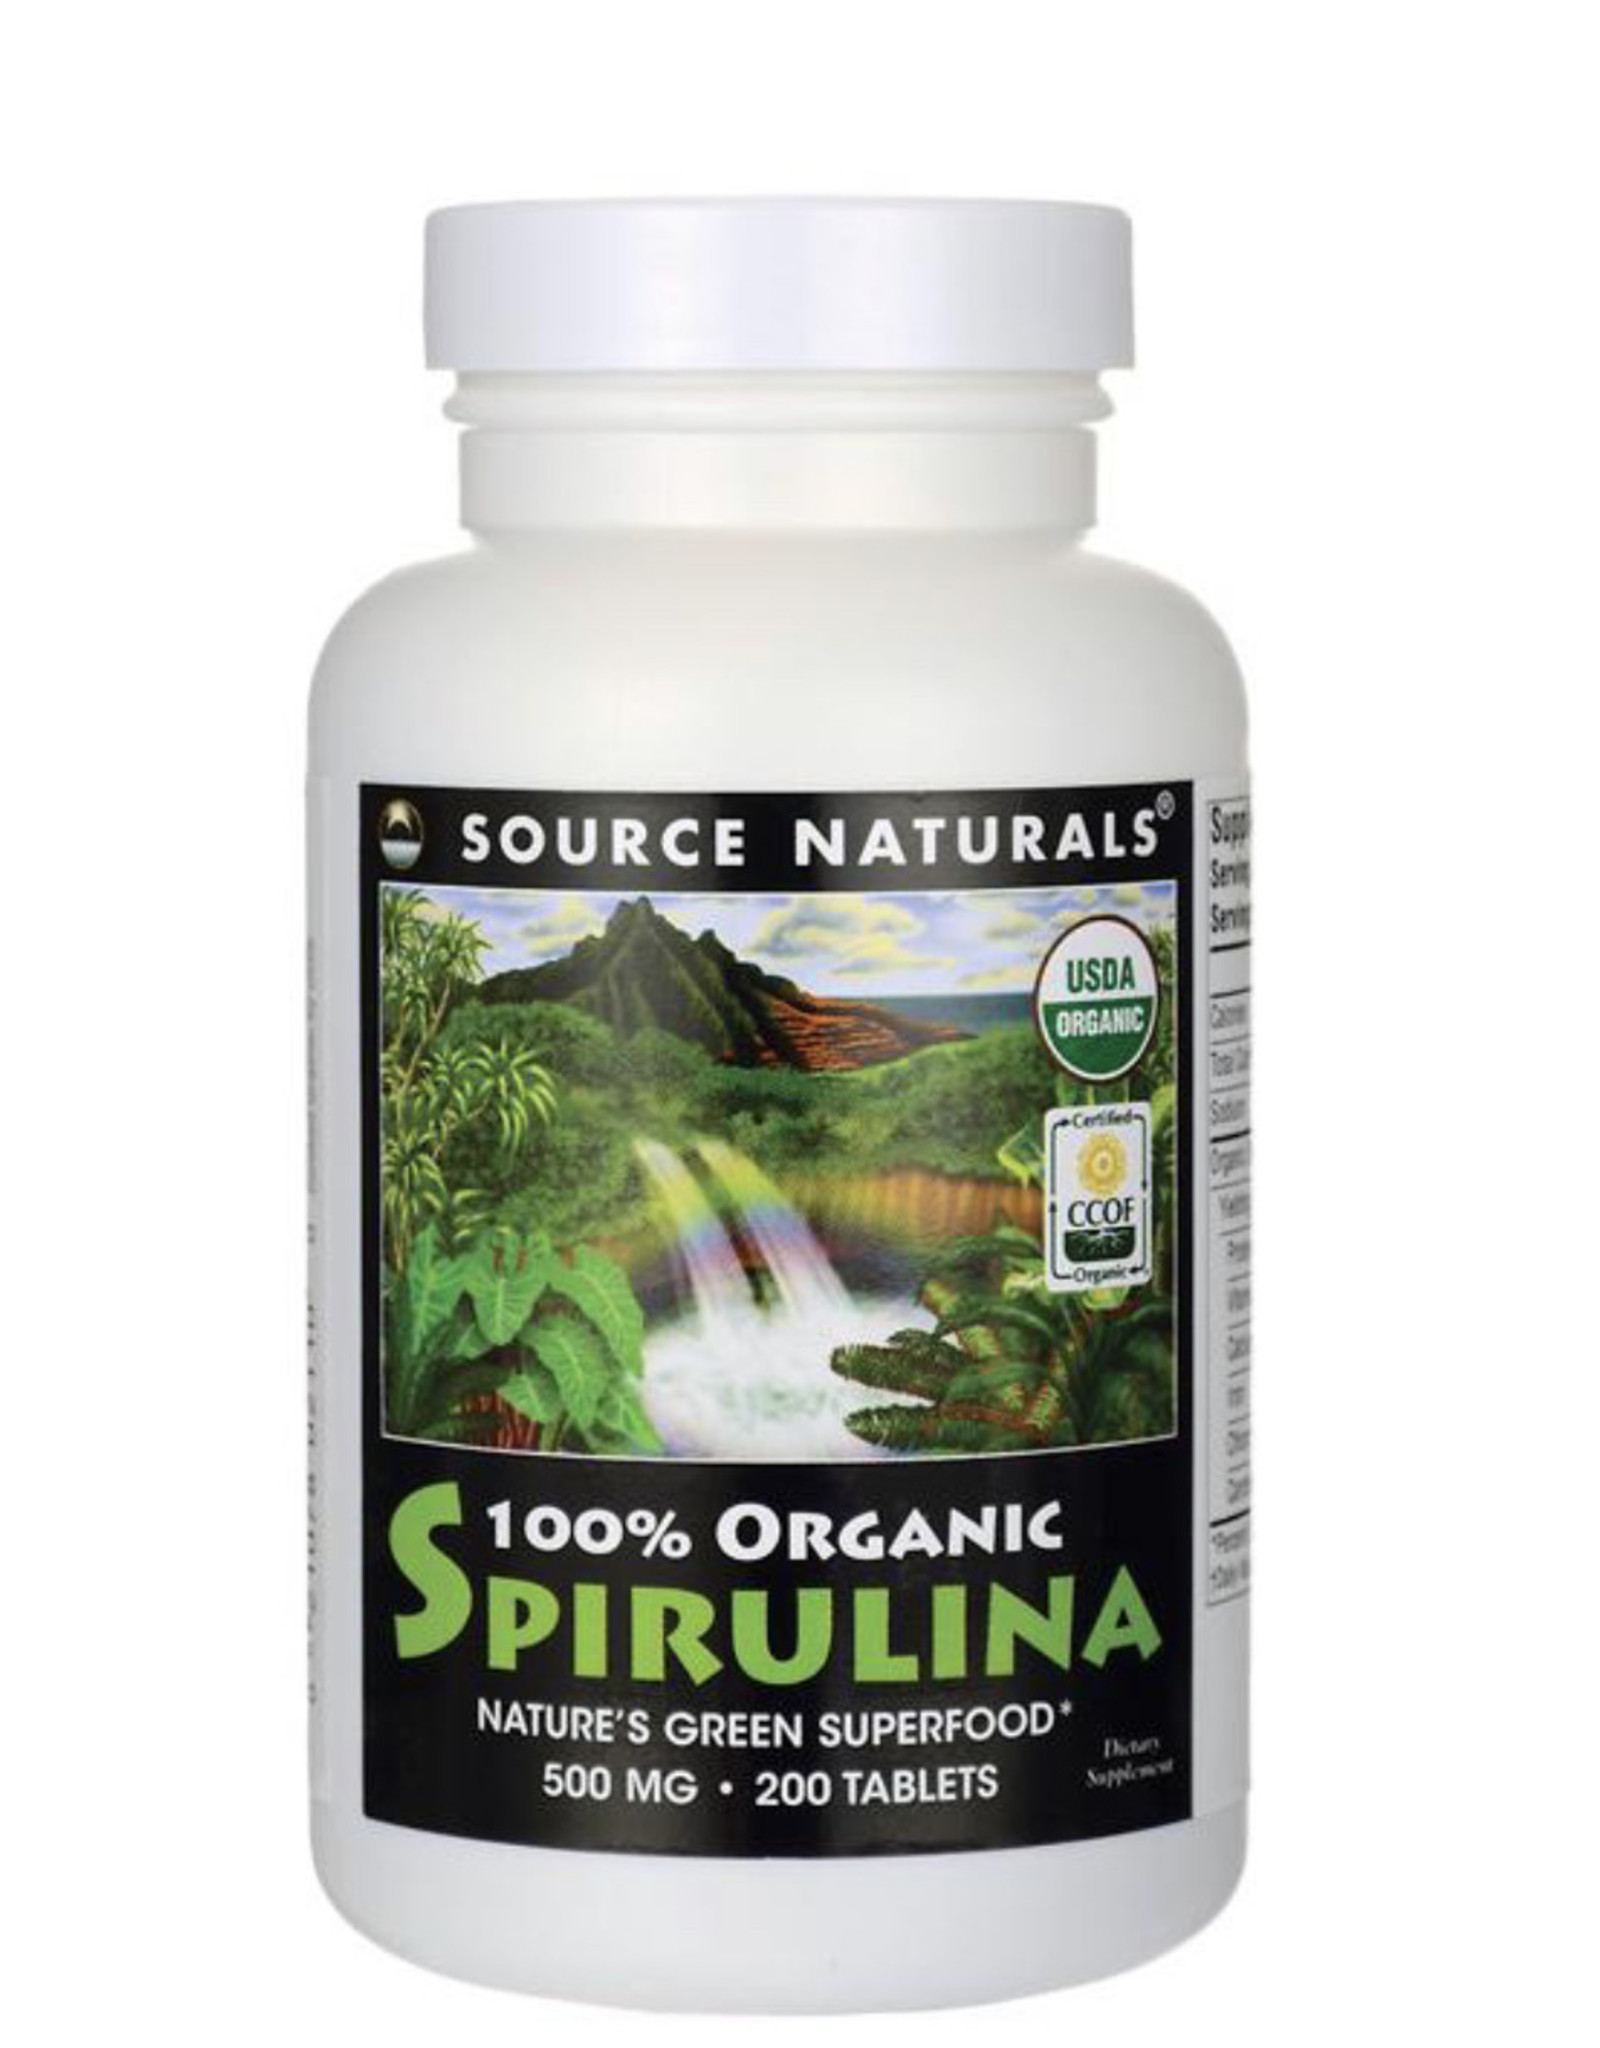 SOURCE NATURALS Spirulina 100% Organic- Source Naturals